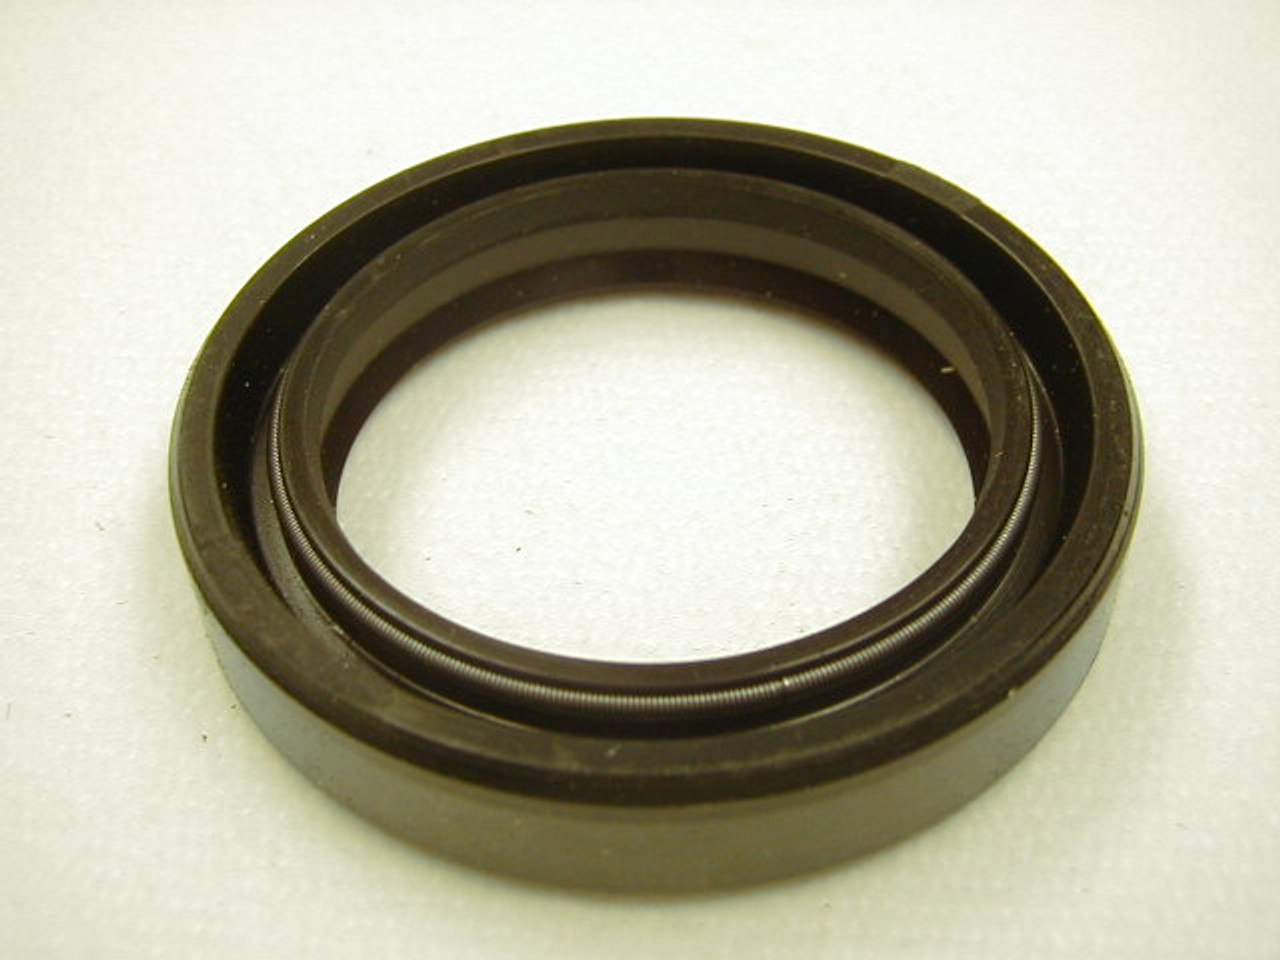 4.813" (122.25mm) Inch Reinforced Metal Dual Single Lip Polyacrylate Oil Seal  48075 D7 PP